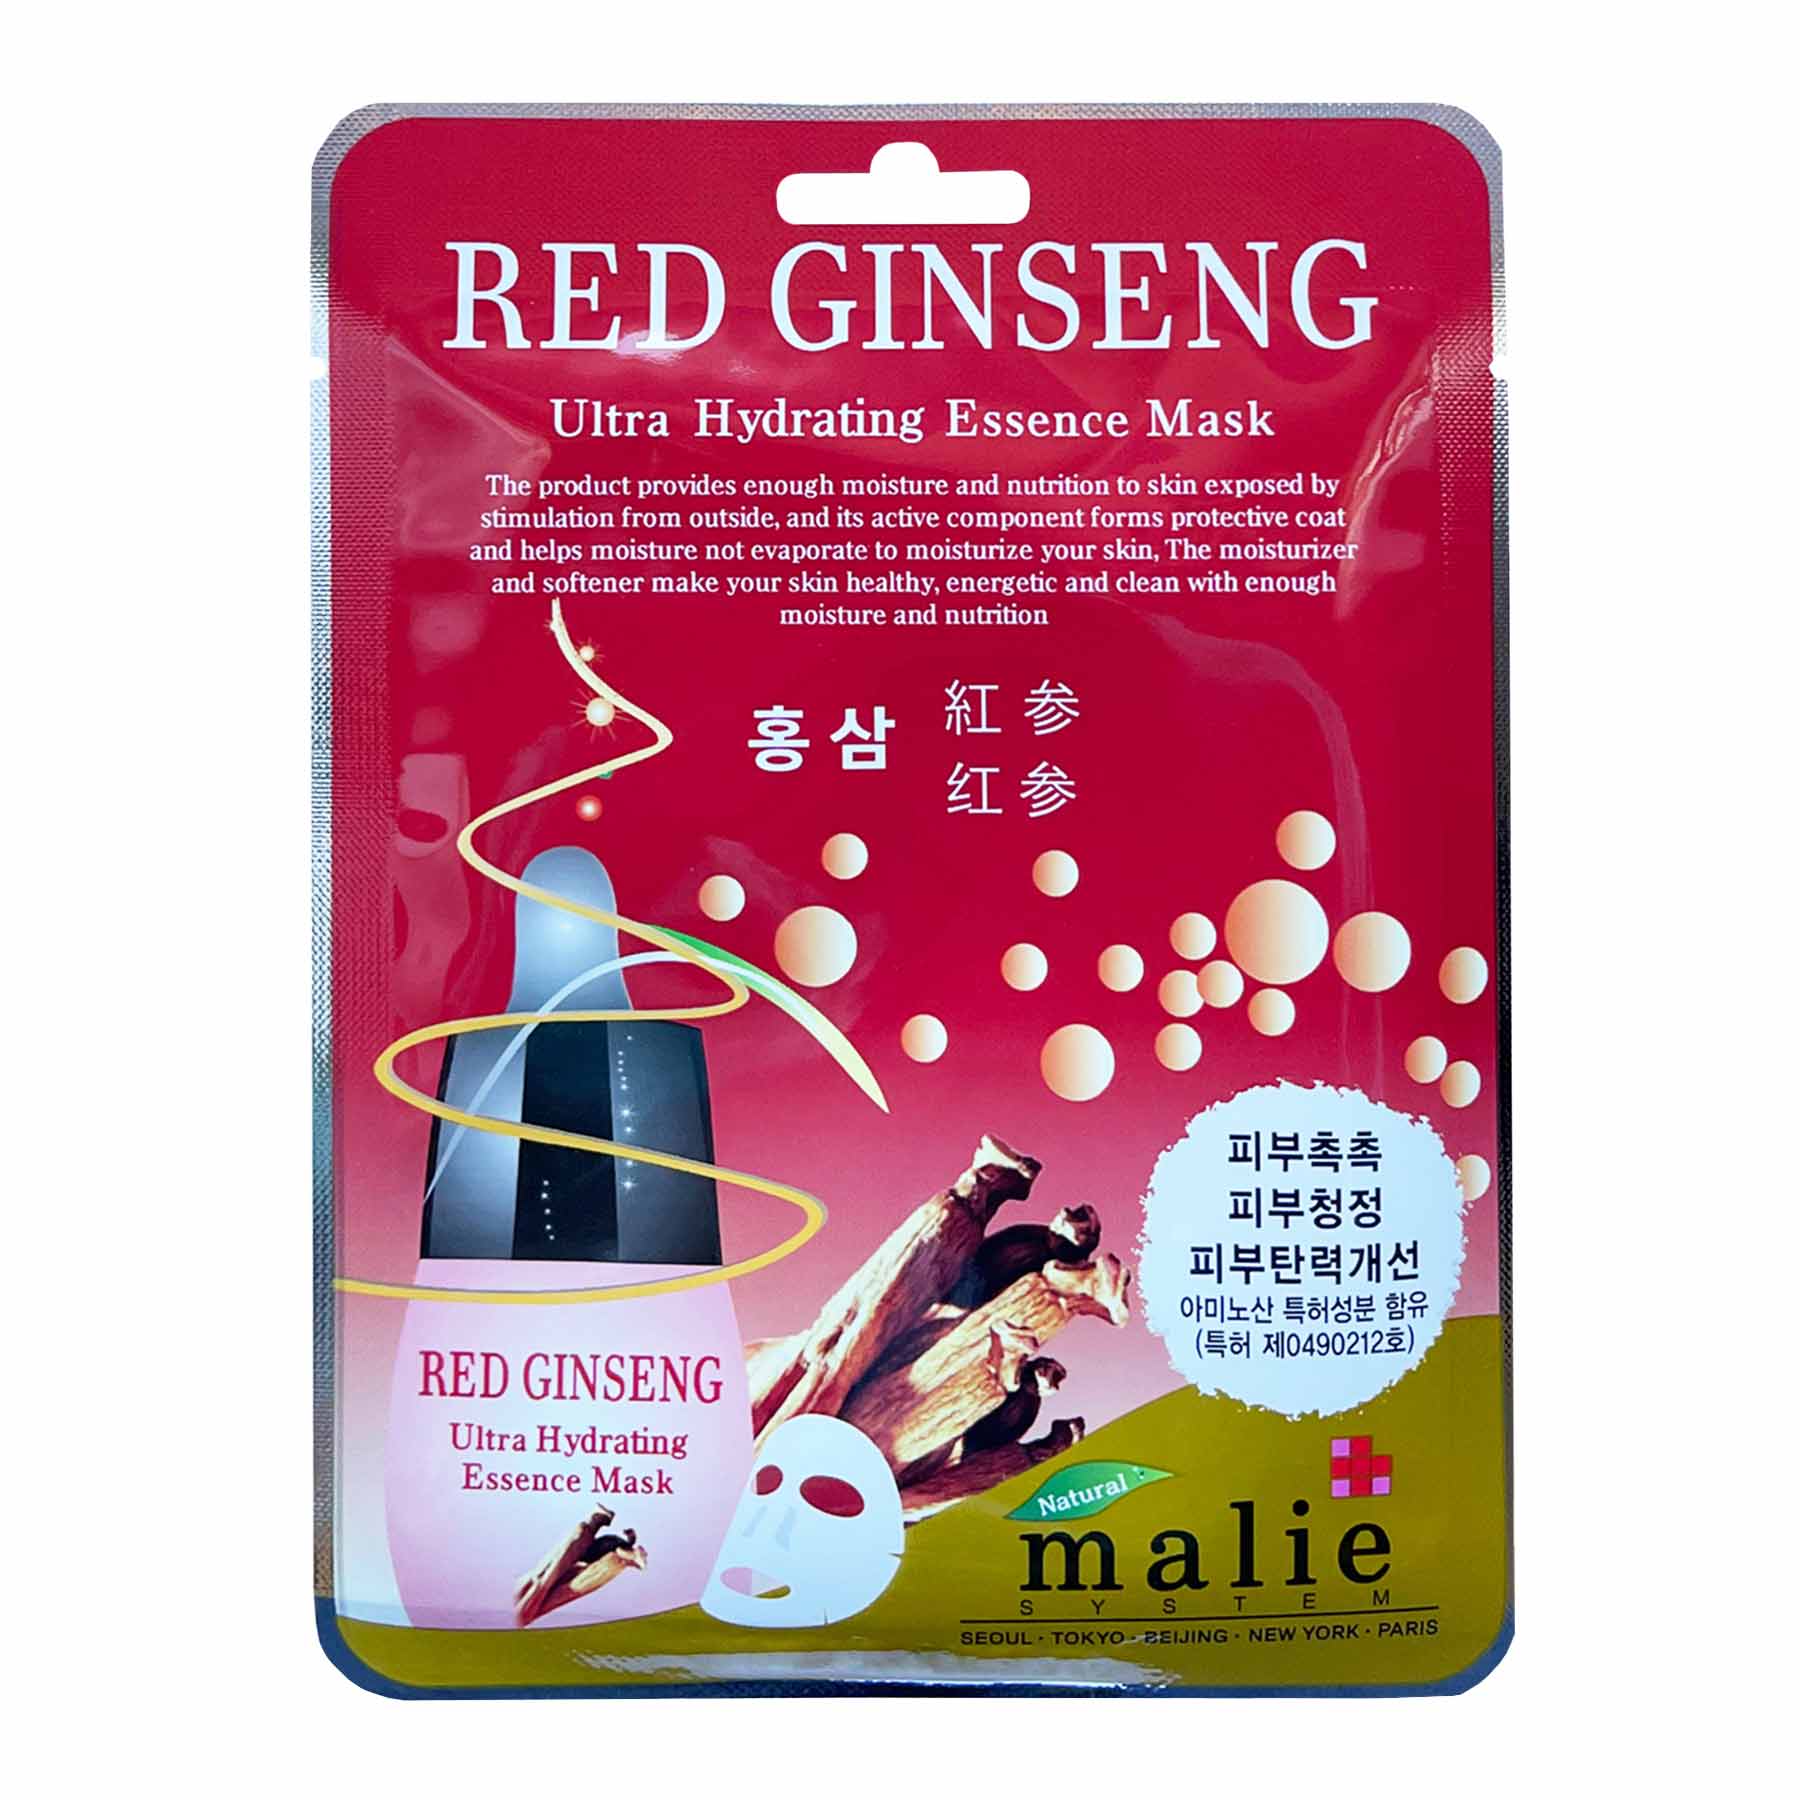 Red Ginseng Ultra Hydrating Essence Mask